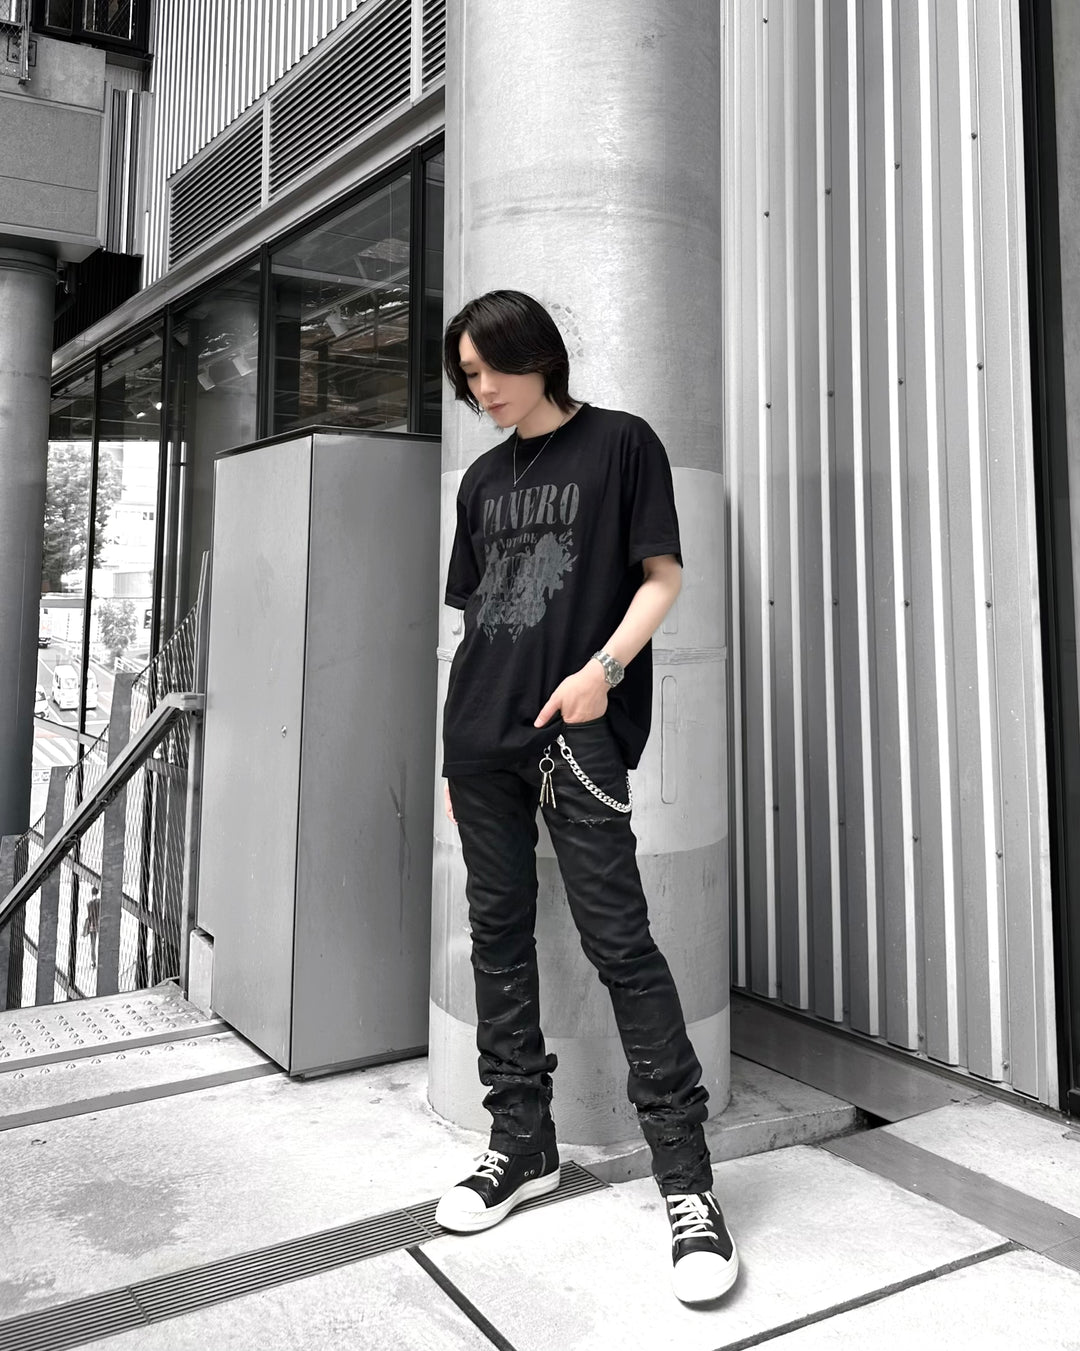 "Notfade Grunge T-shirt" (Black × Gray)